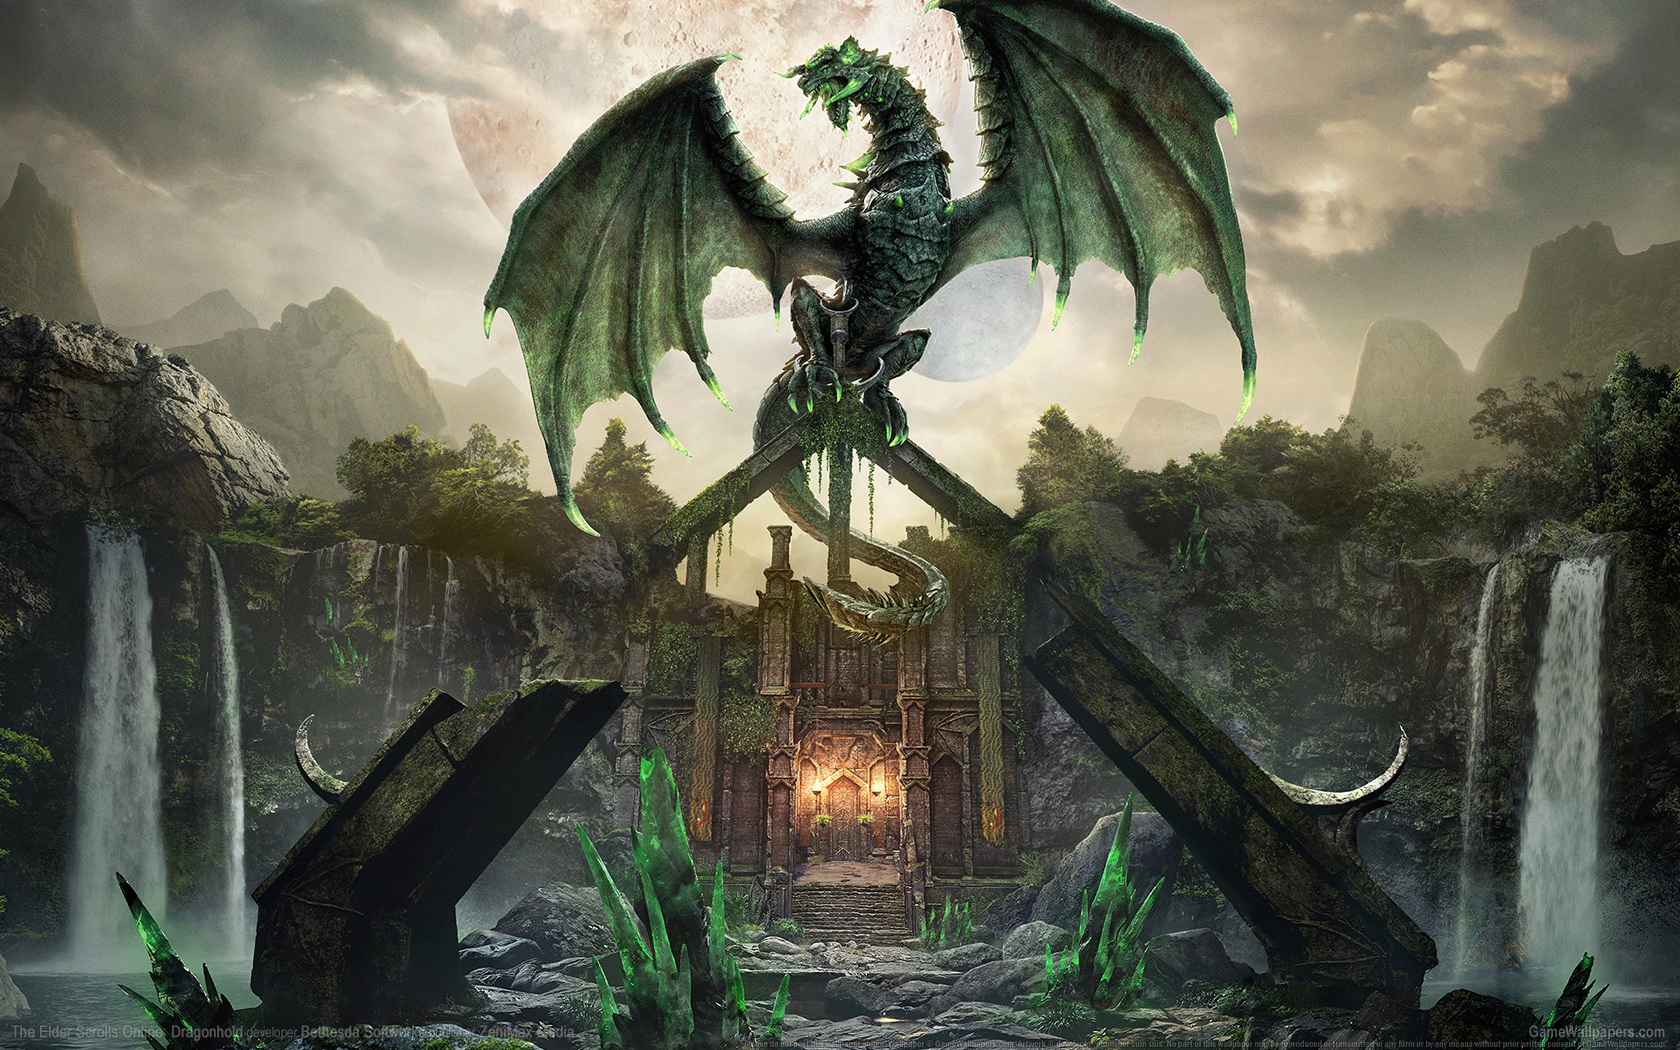 The Elder Scrolls Online: Dragonhold 1680x1050 wallpaper or background 01